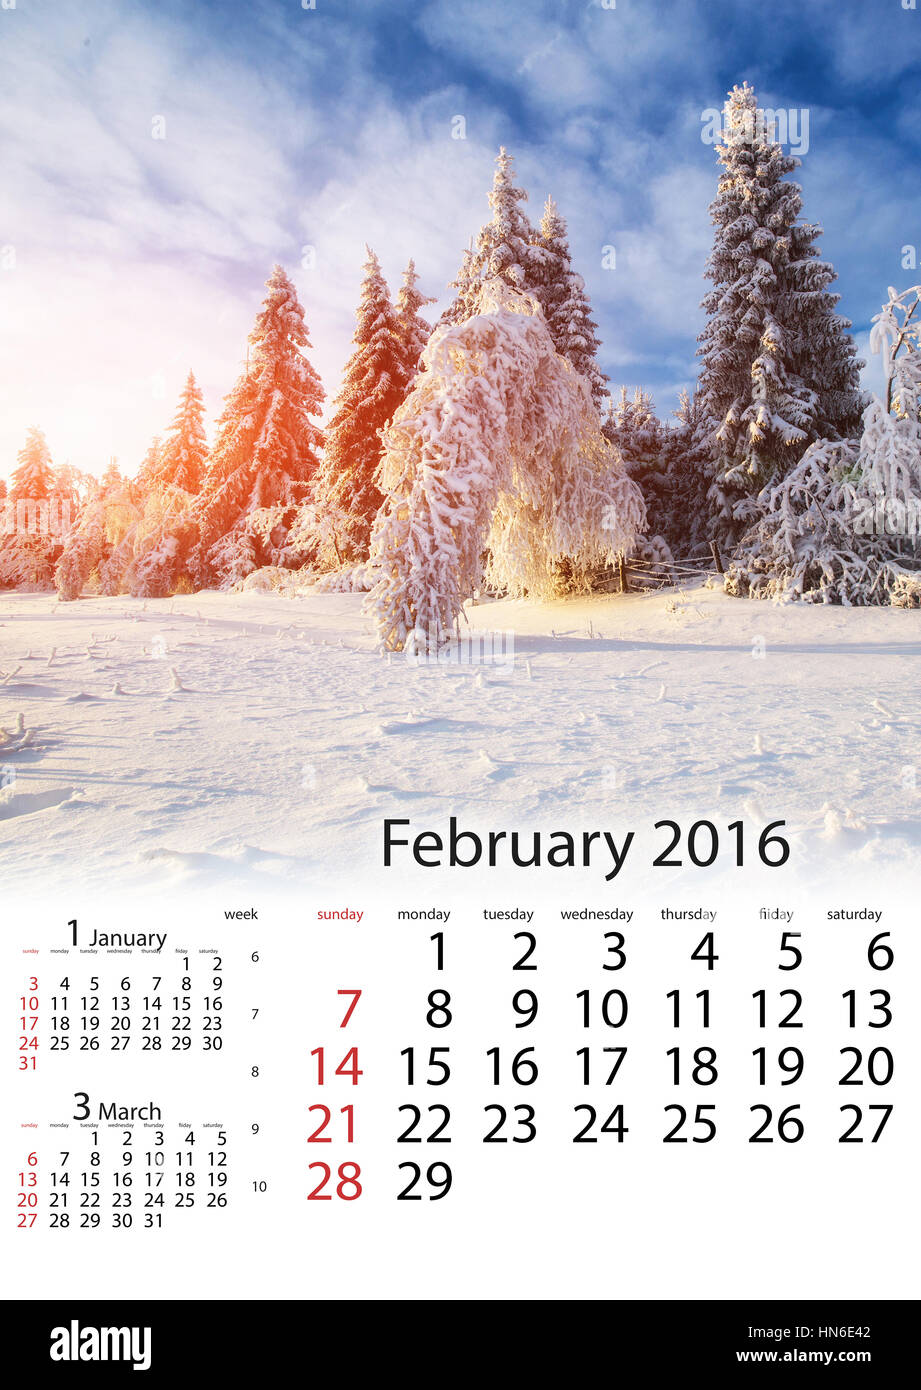 Calendar February 2016 - winter landscape trees. Stock Photo